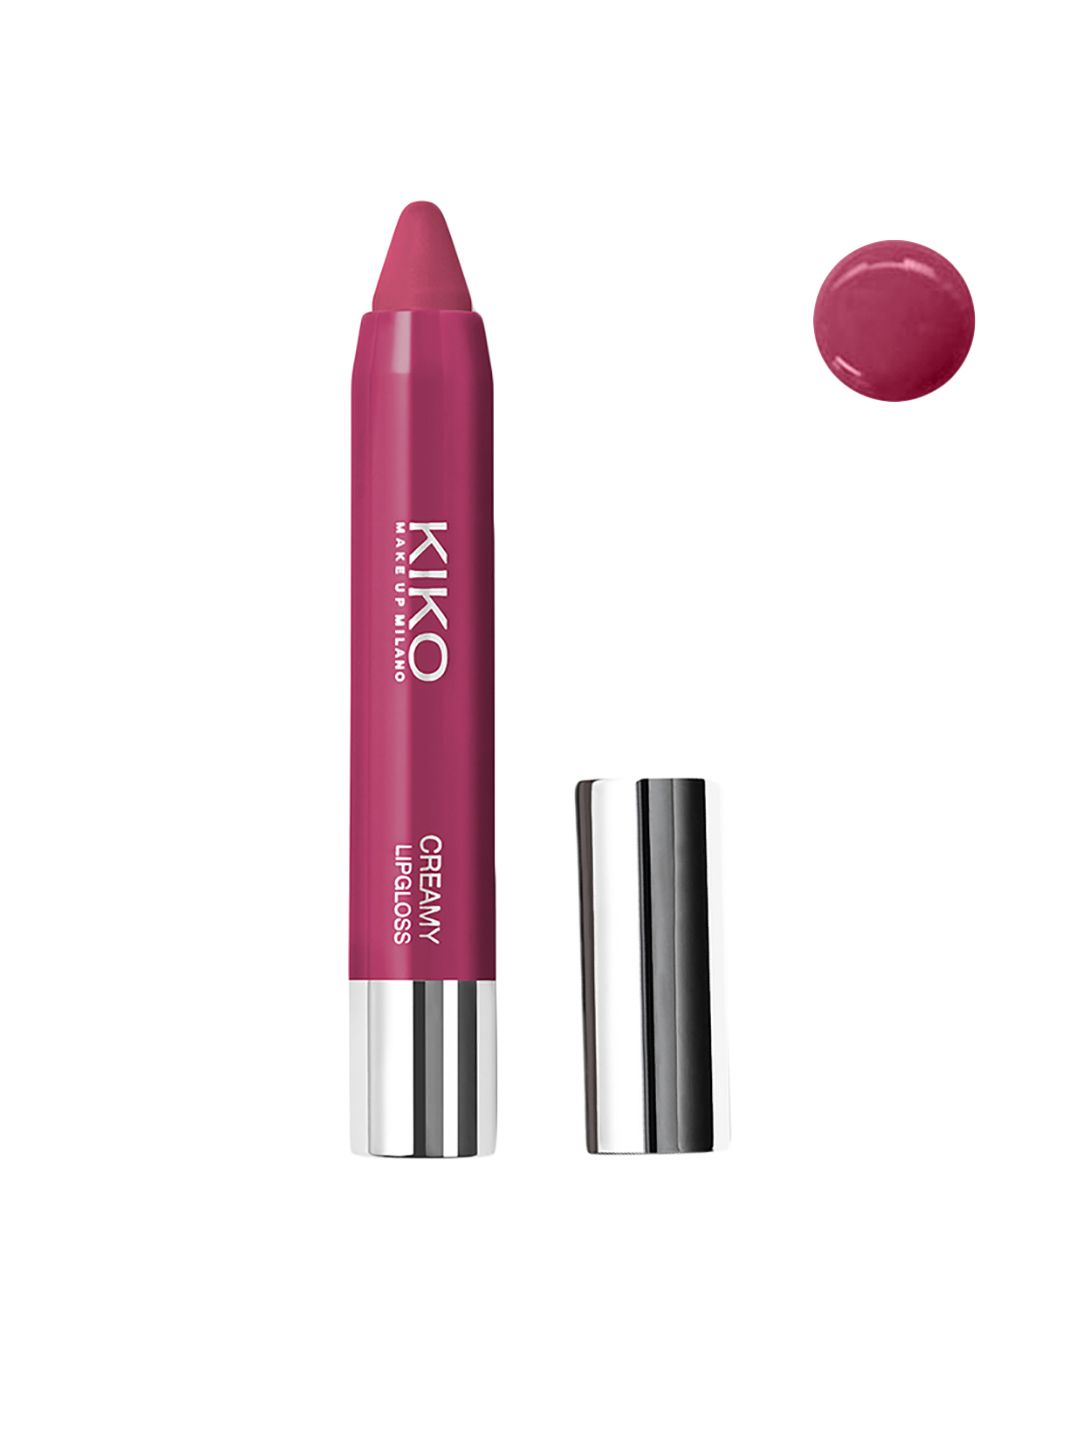 KIKO MILANO Creamy Lip Gloss 107 Price in India